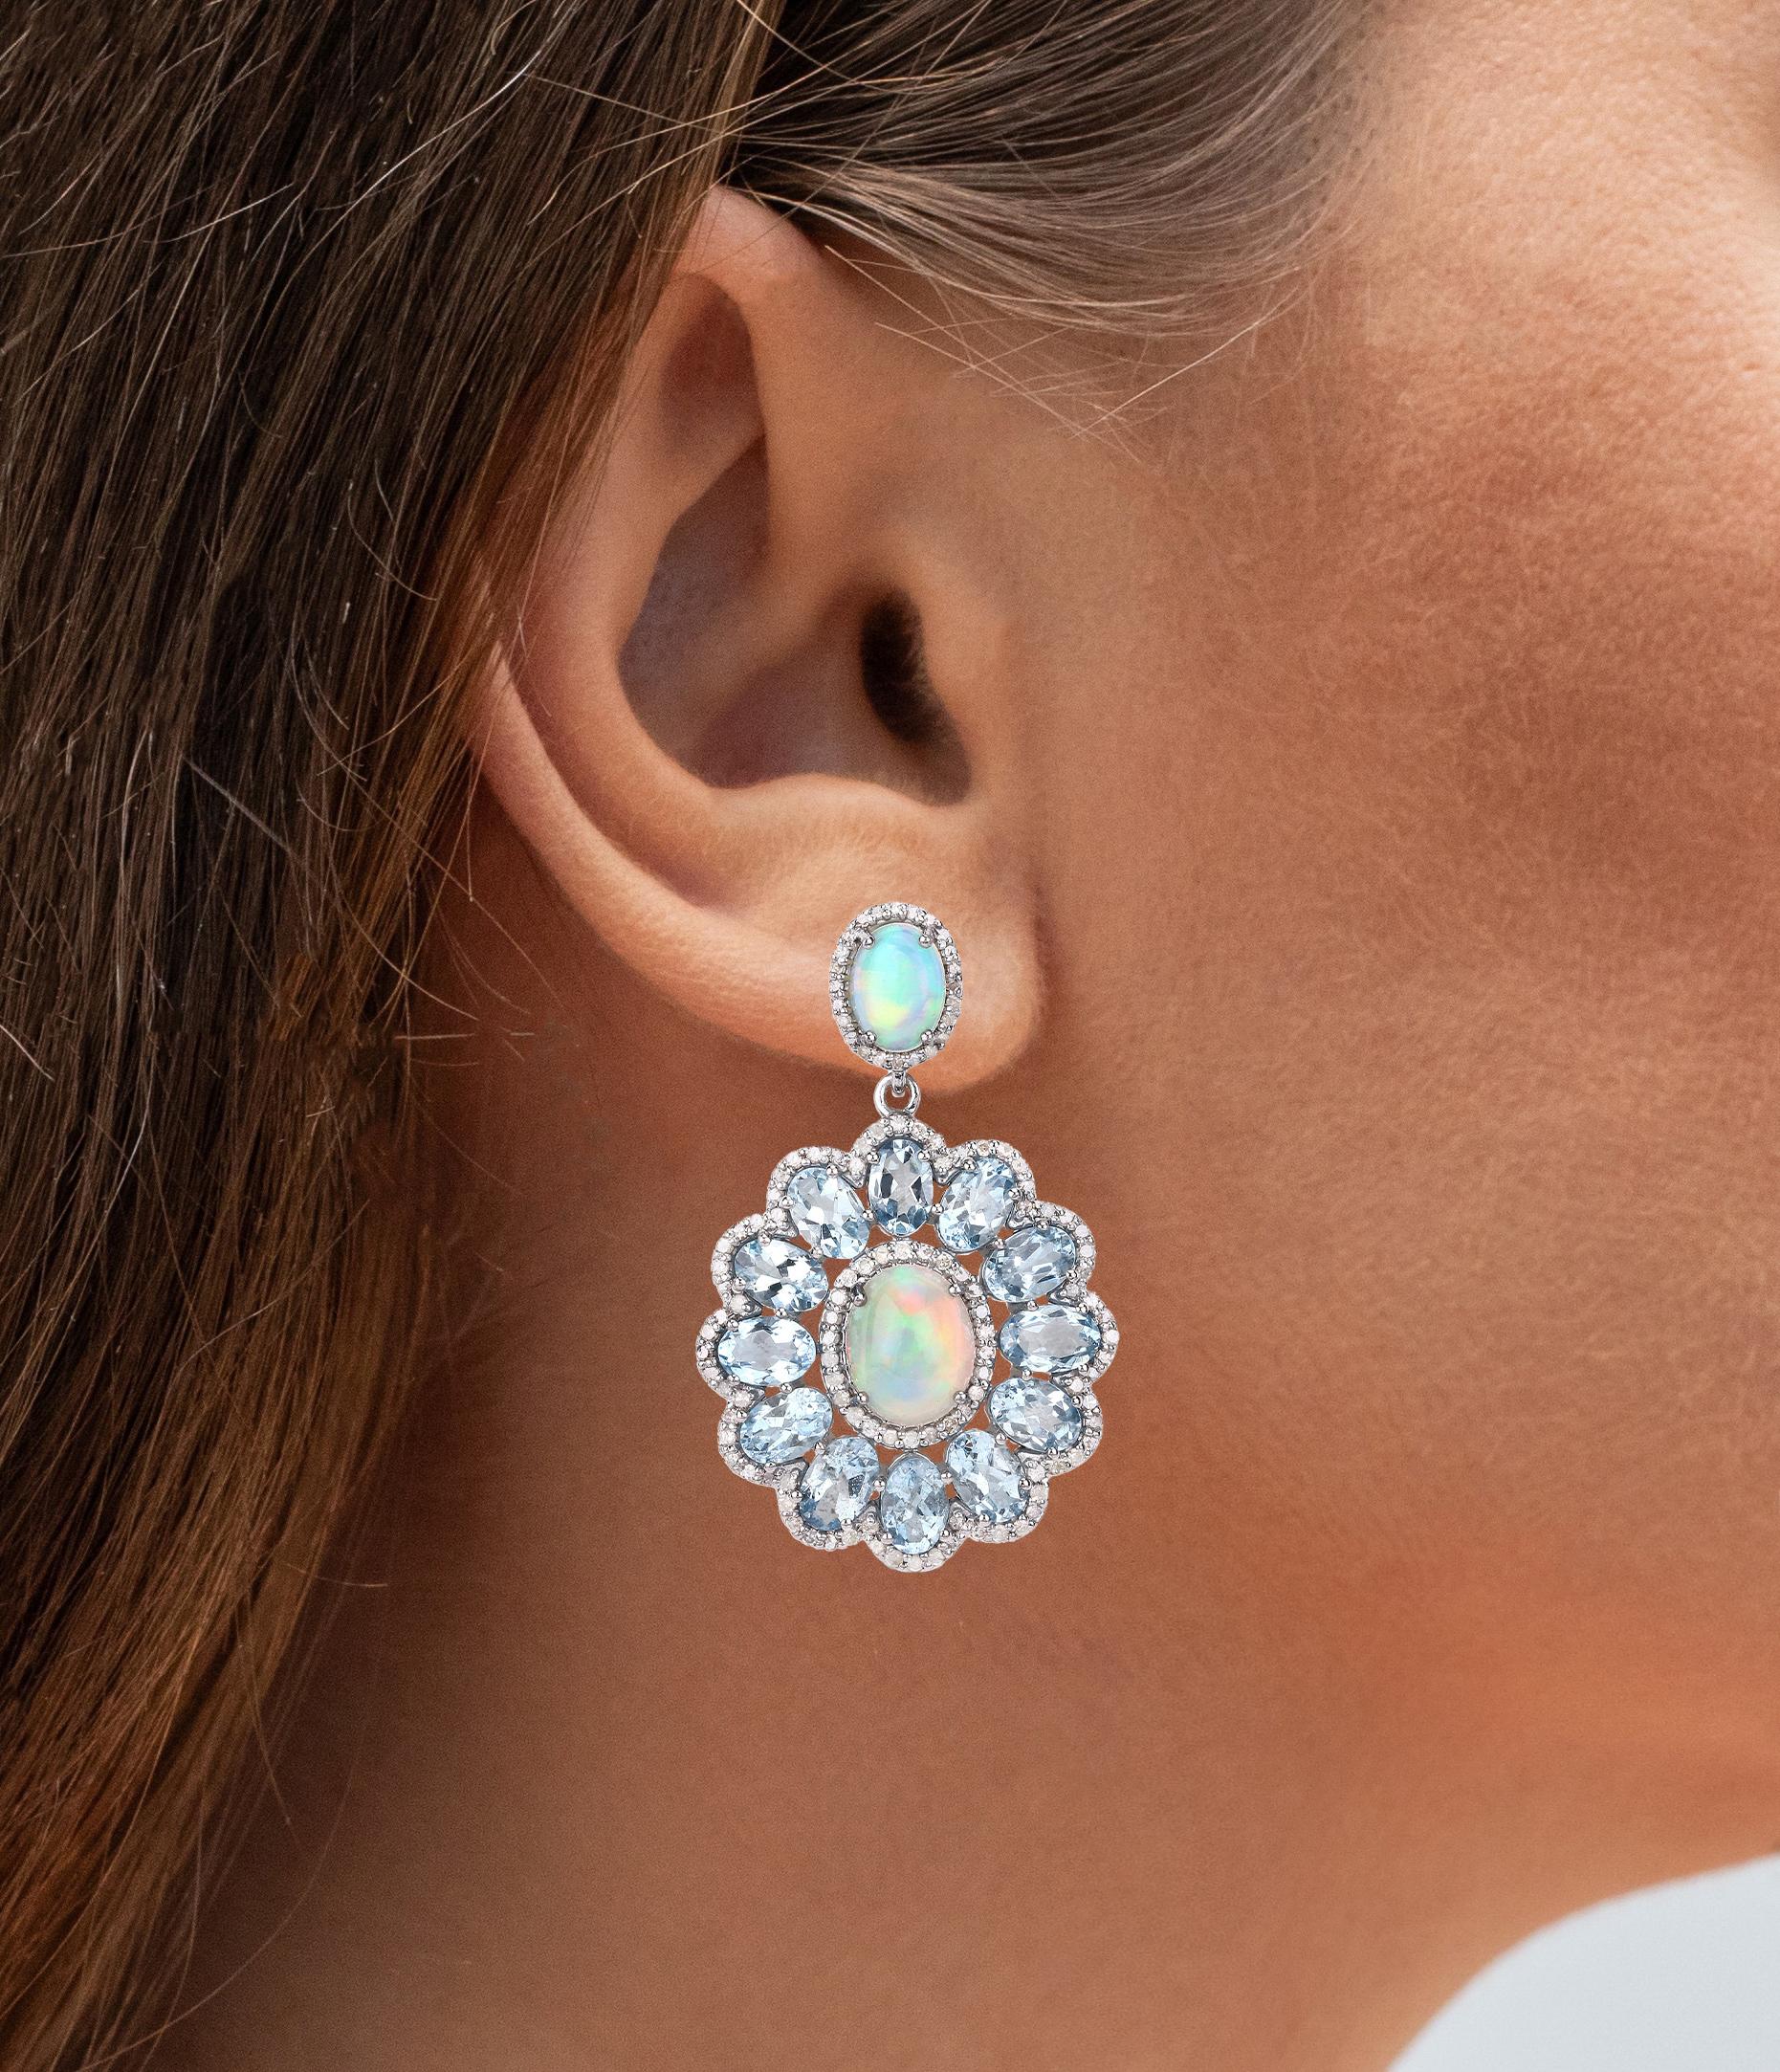 Art Nouveau Aquamarine Opal Dangle Earrings Diamond Setting 16.27 Carats Total For Sale